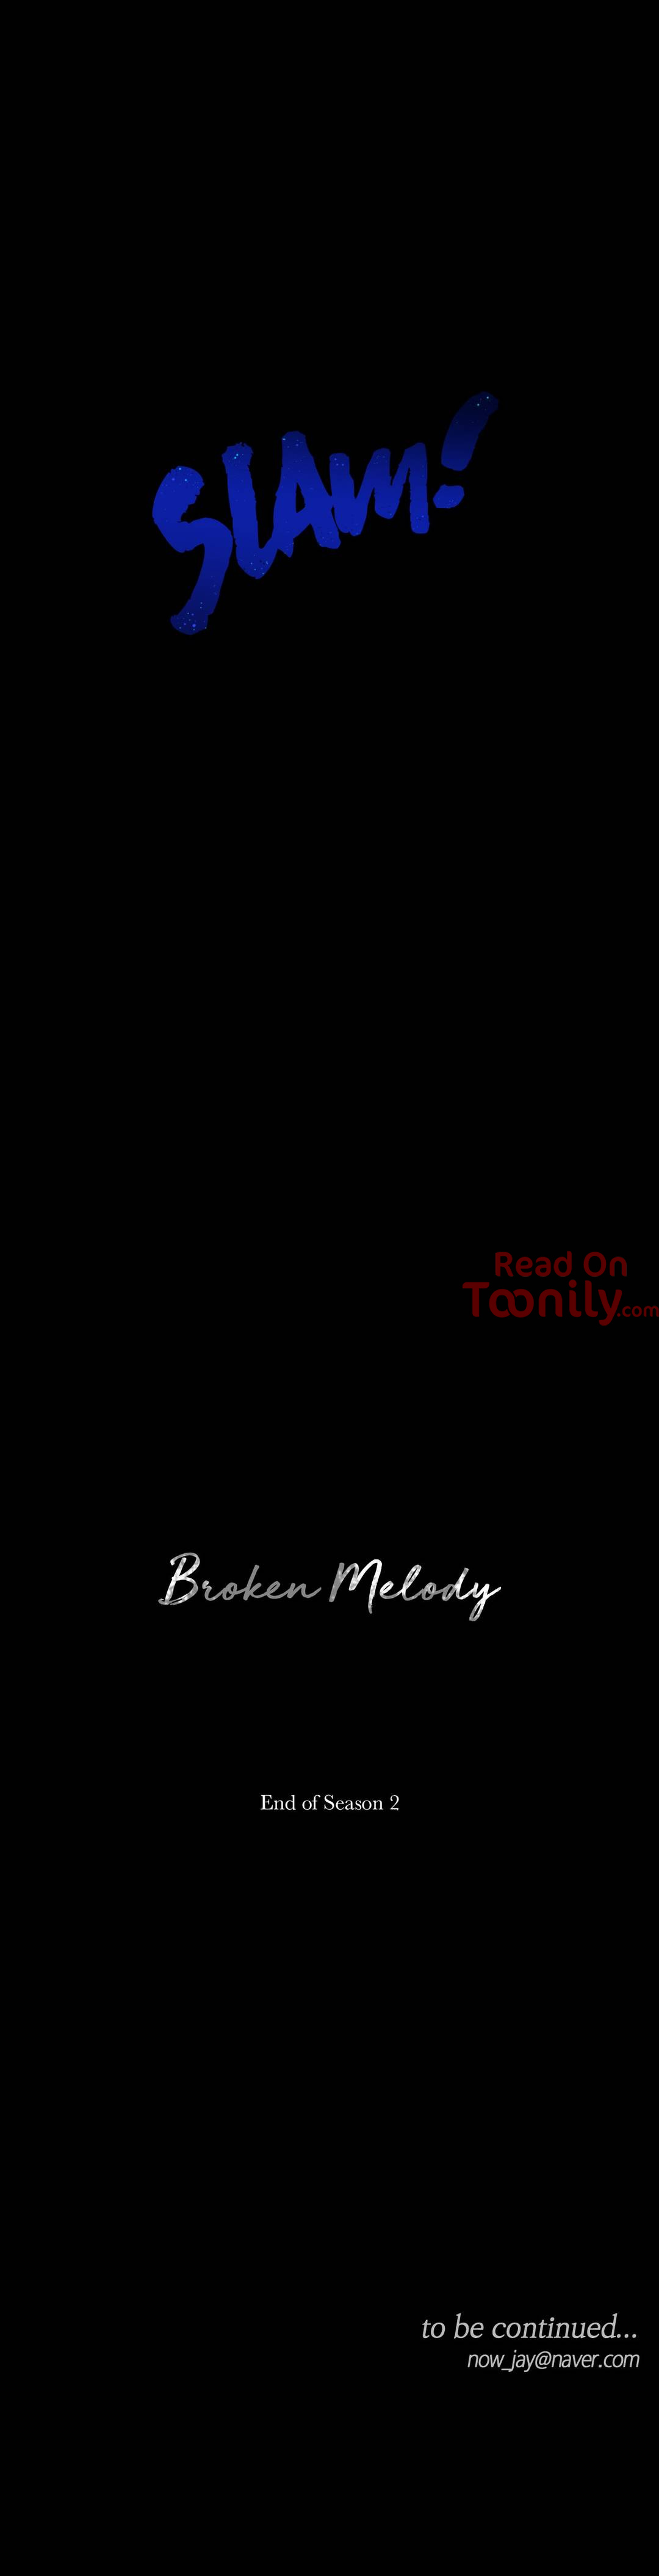 Broken Melody image